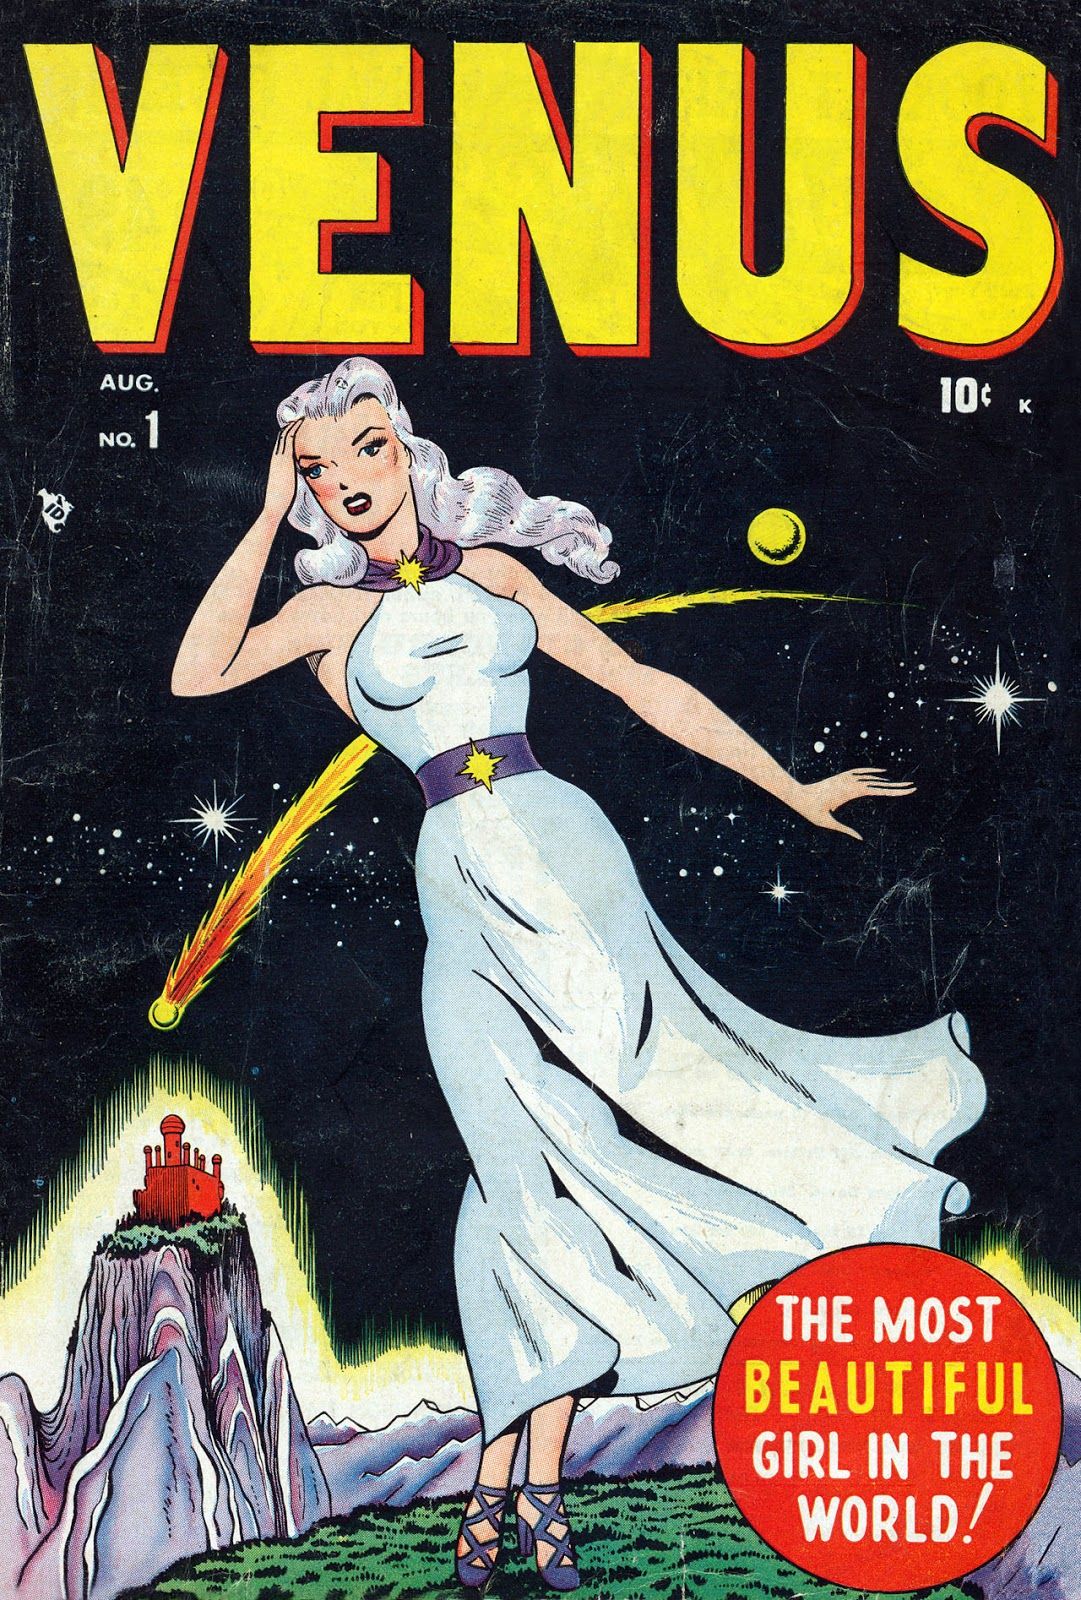 Venus makes her debut